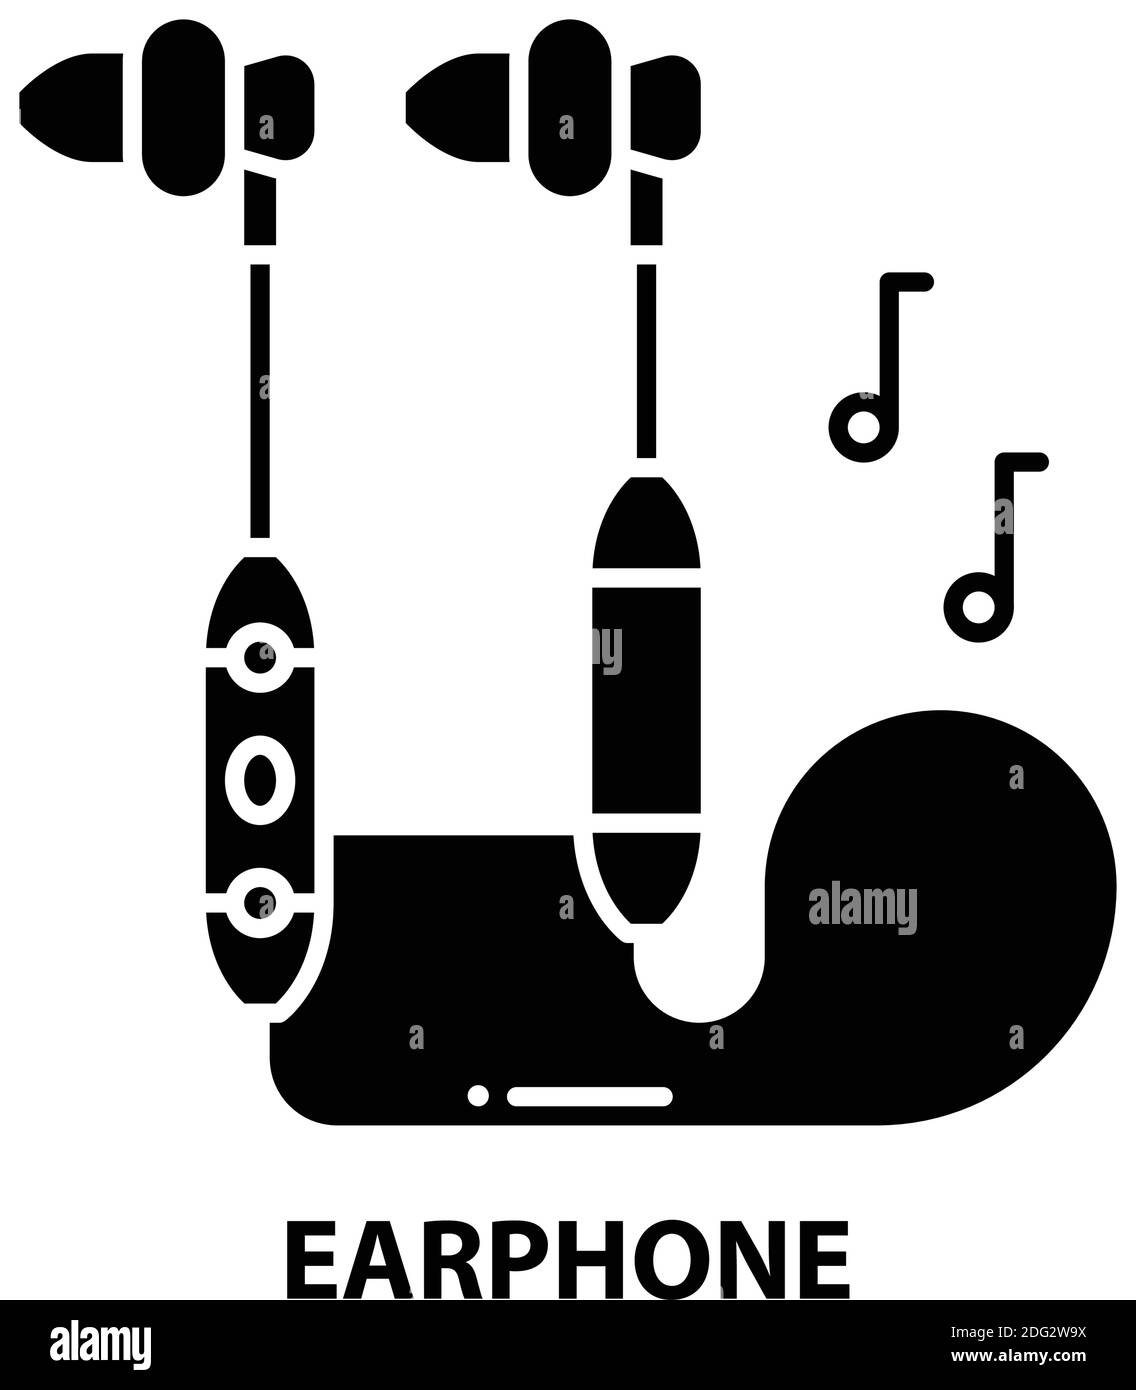 earphone icon, black vector sign with editable strokes, concept illustration Stock Vector